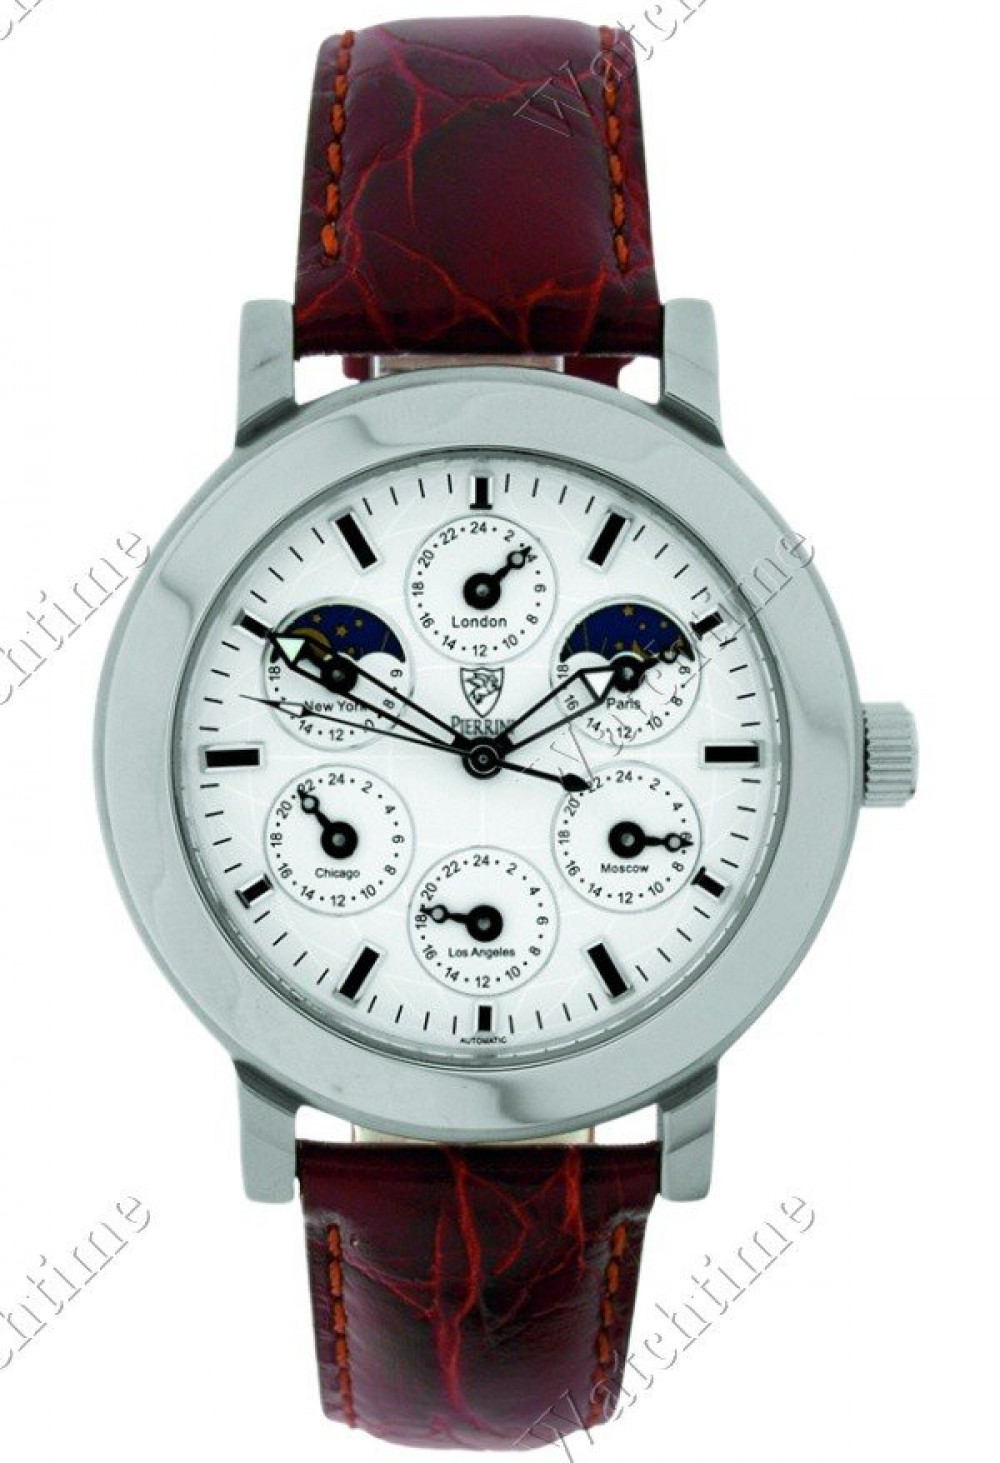 Zegarek firmy Pierrini, model 385722029020